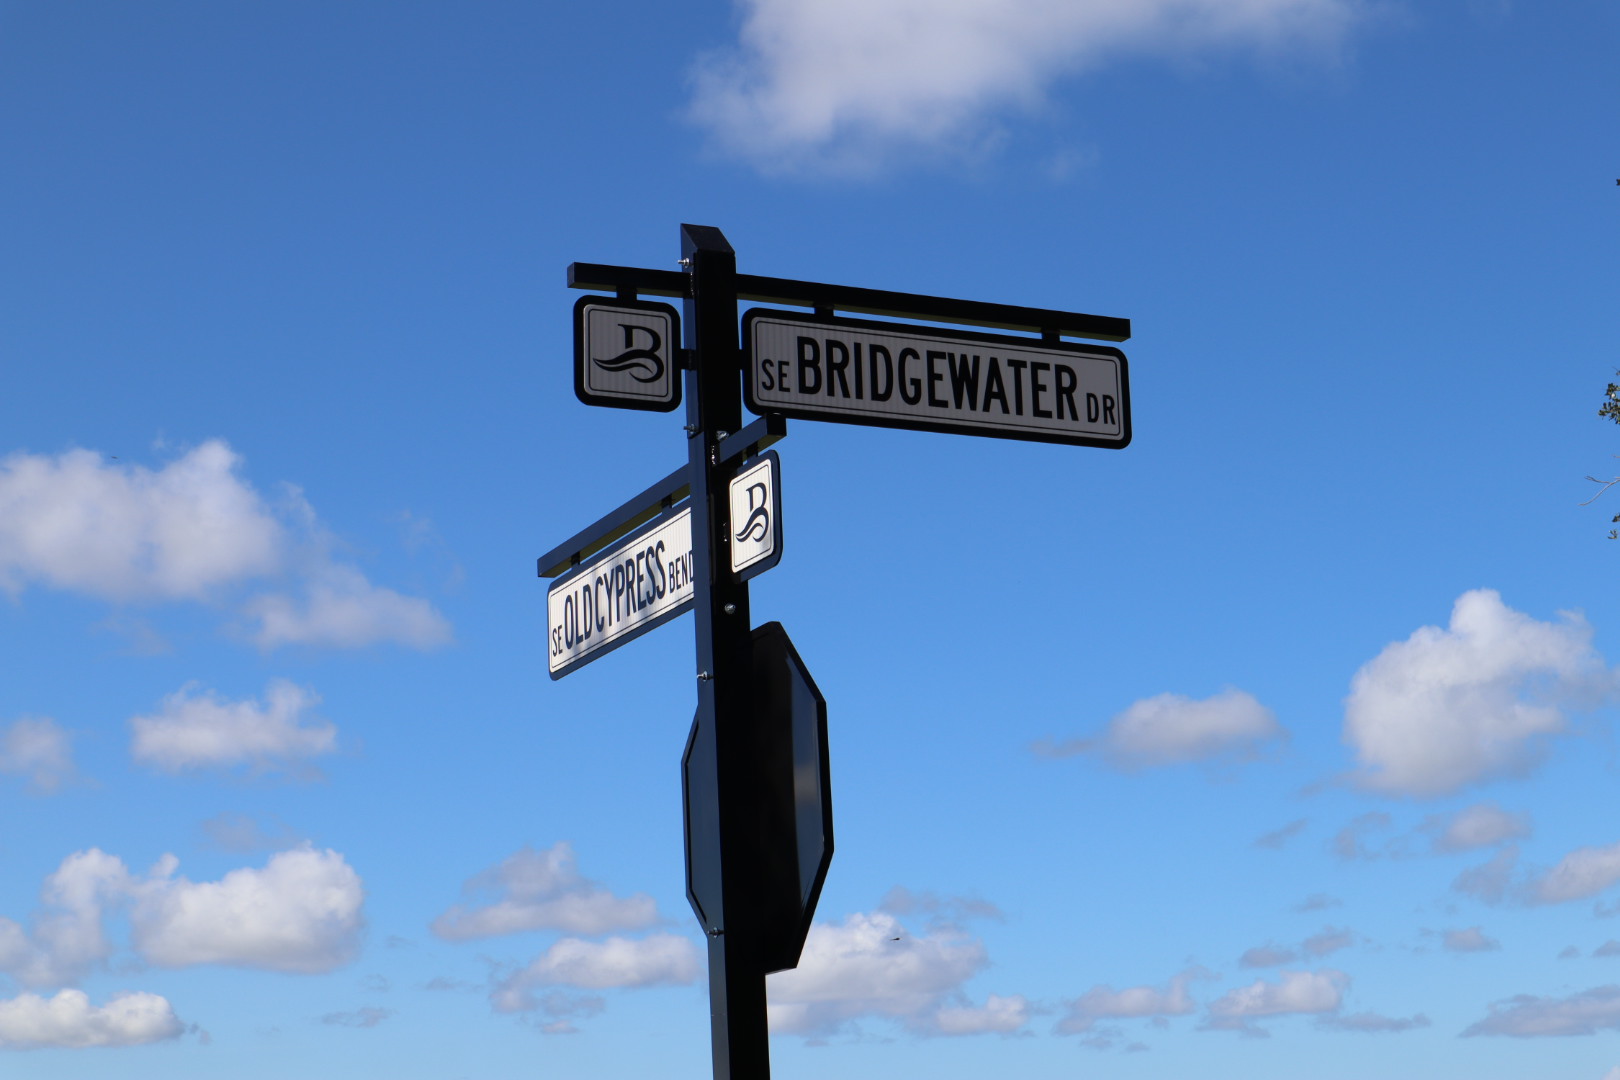 photo of stop sign at se bridgwater drive & se oldcypress bend